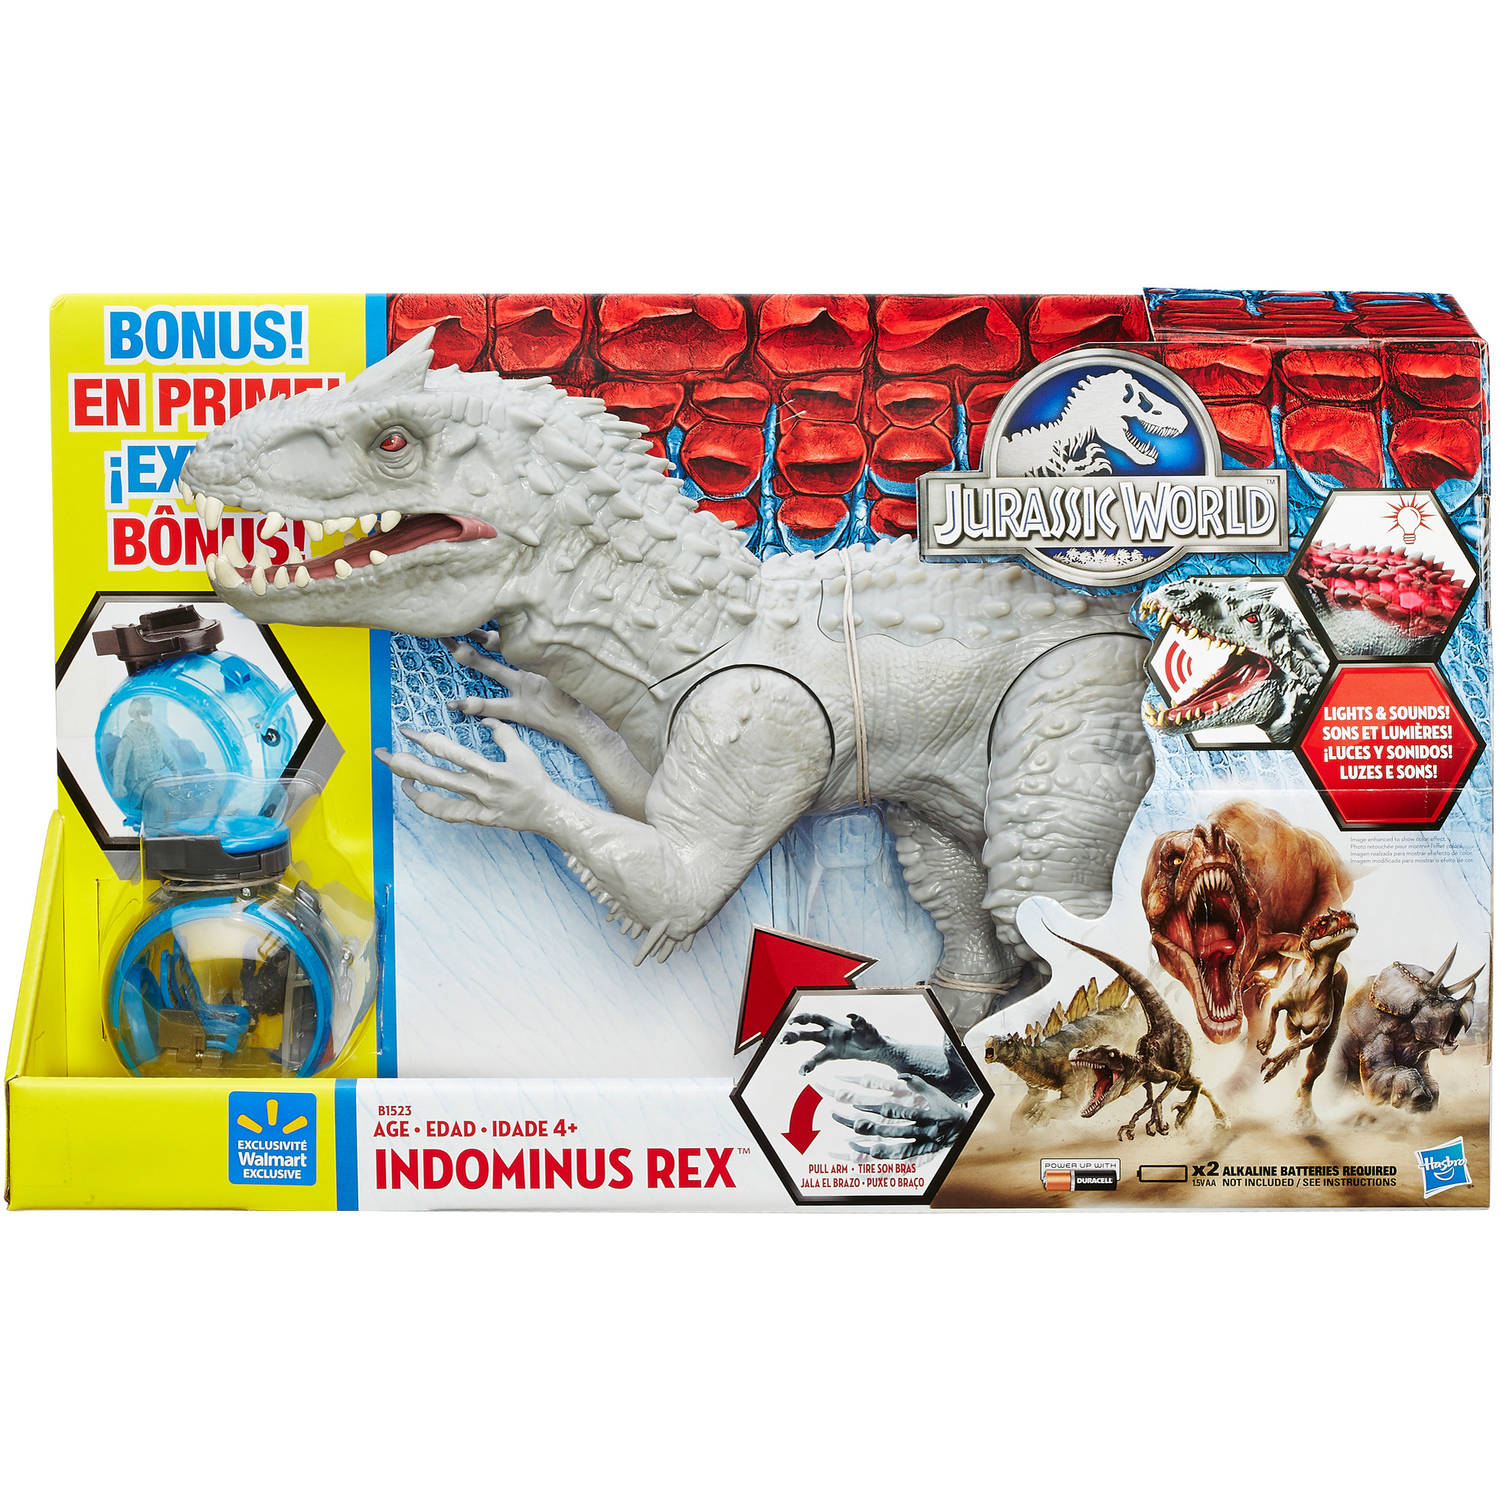 Jurassic Park Jw Indominus Rex Bonus Pack - image 2 of 2